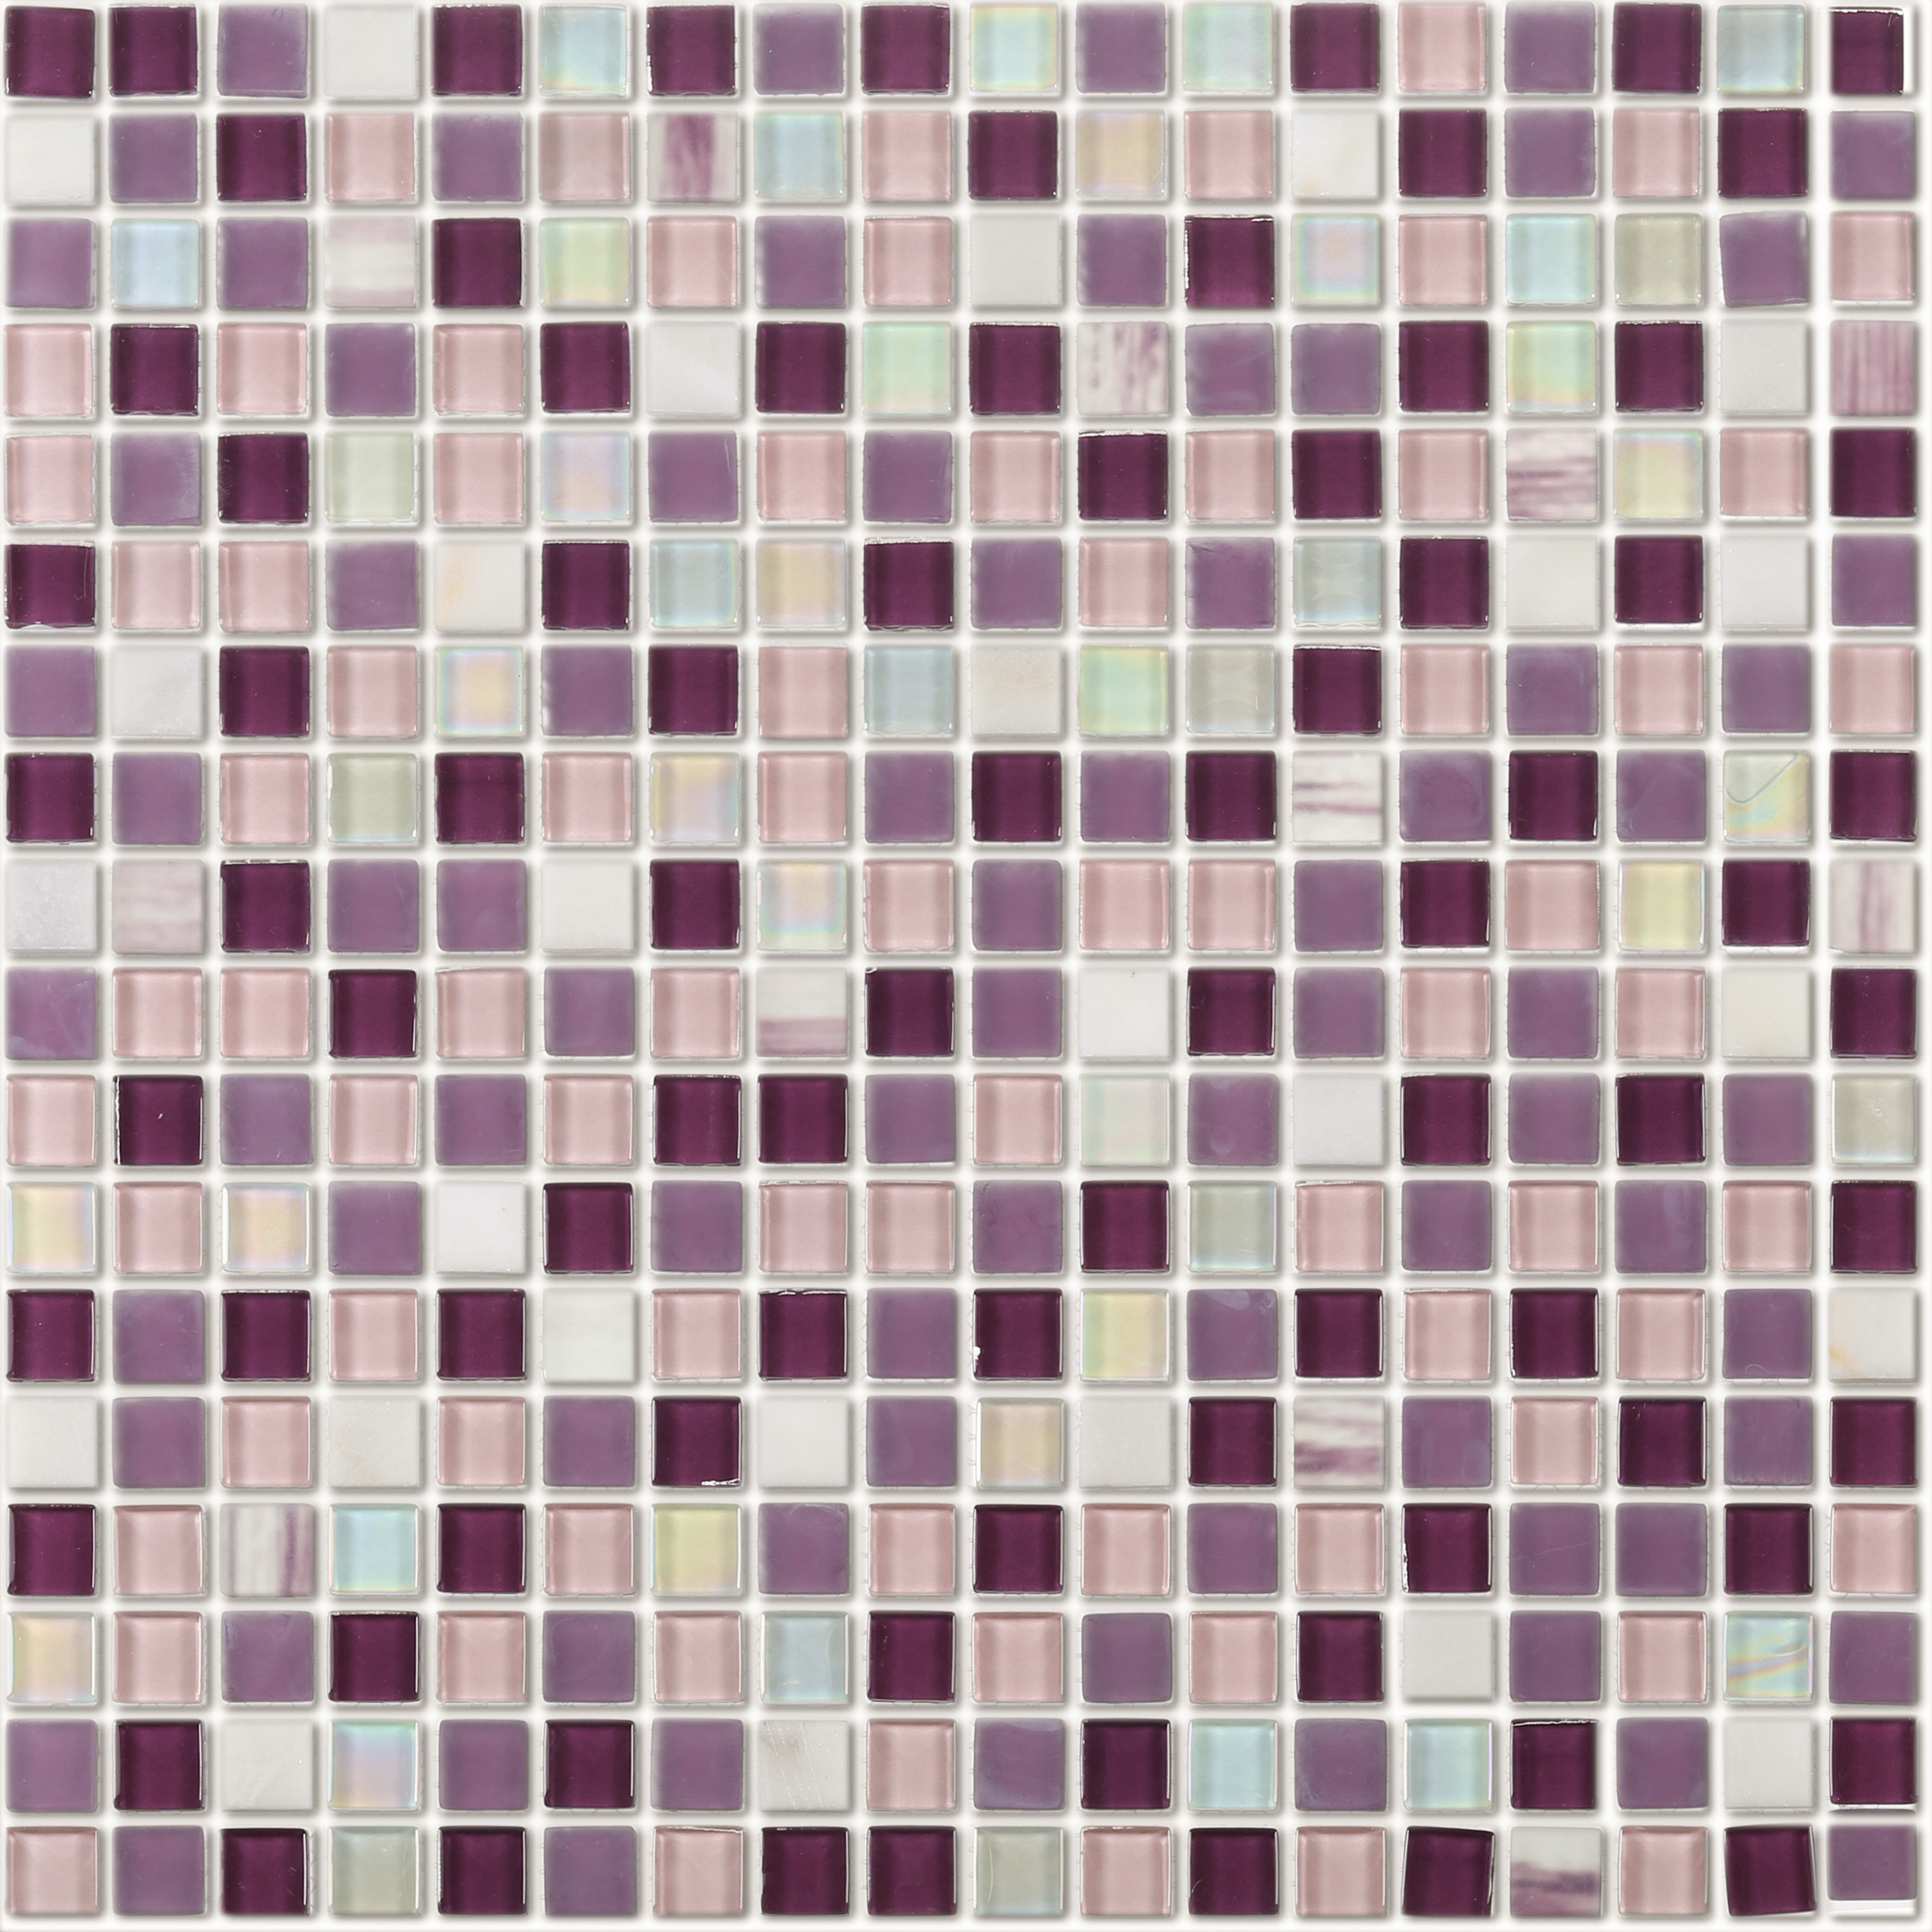 Мозаика Lavelly Elements Pearl Violet Mix жемчужно-фиолетовый микс из стекла и камня 305х305х4 мм